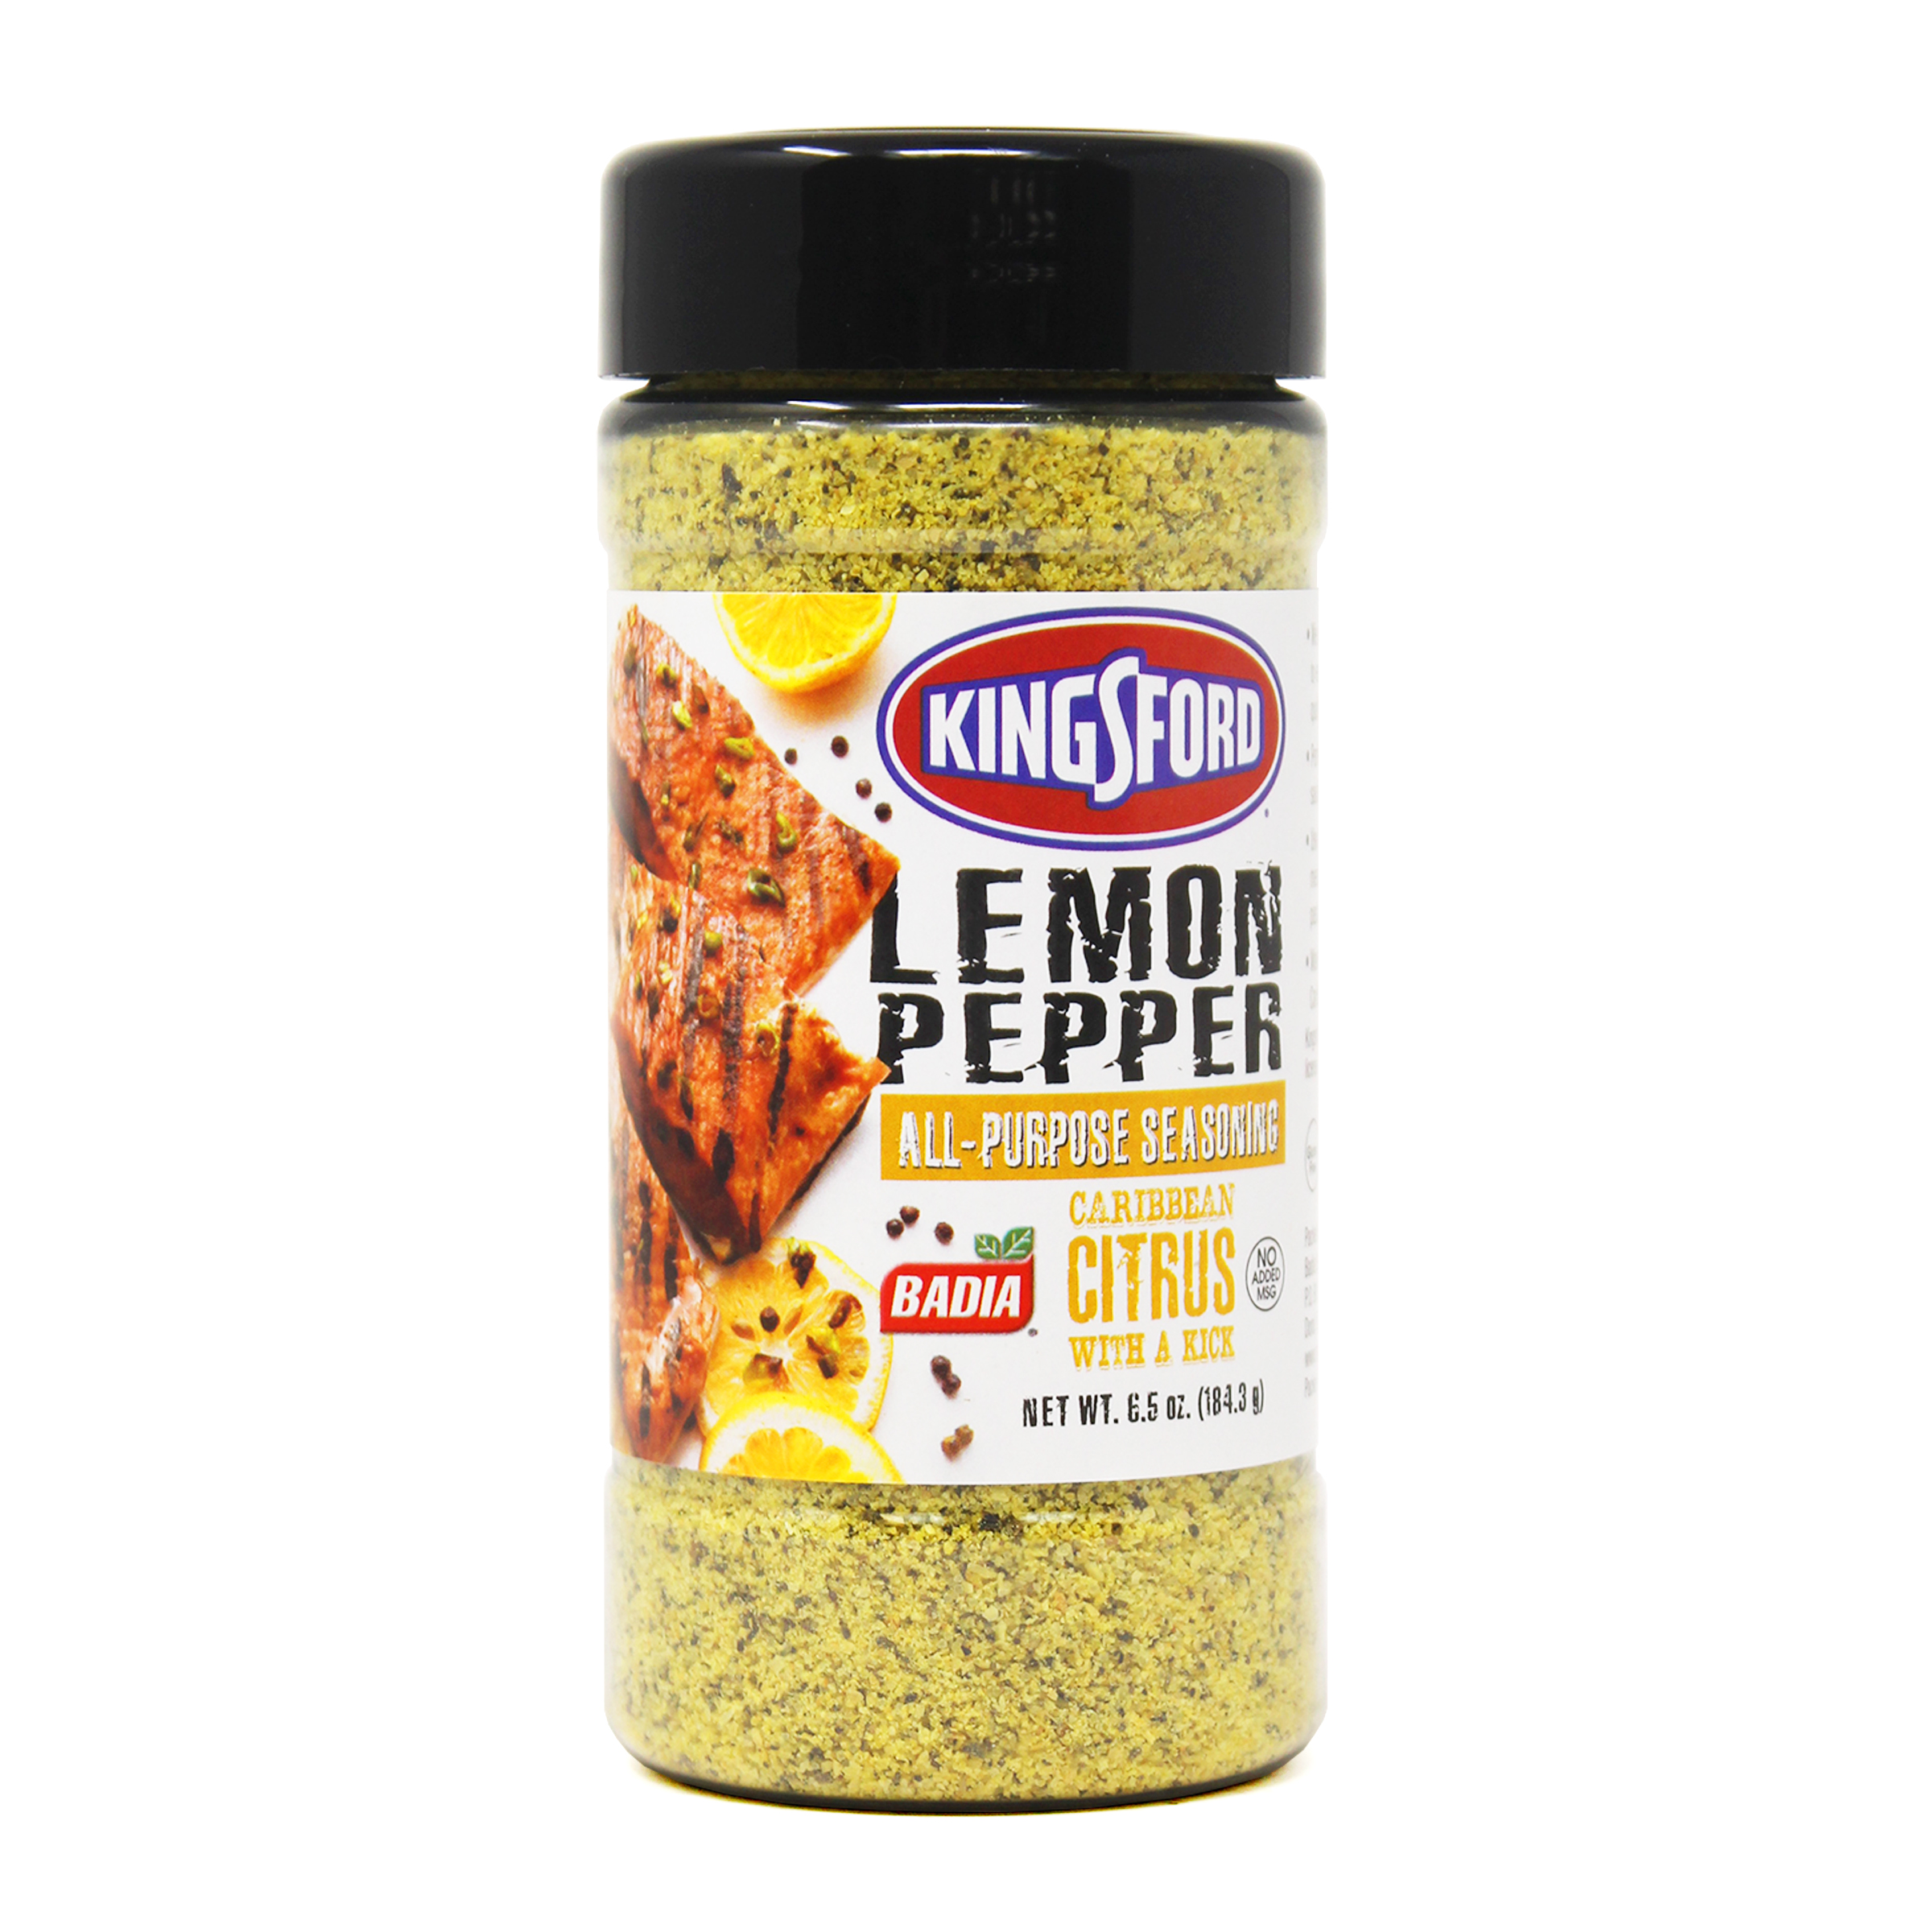 Kingsford Original All-Purpose Seasoning - 8 oz - Badia Spices